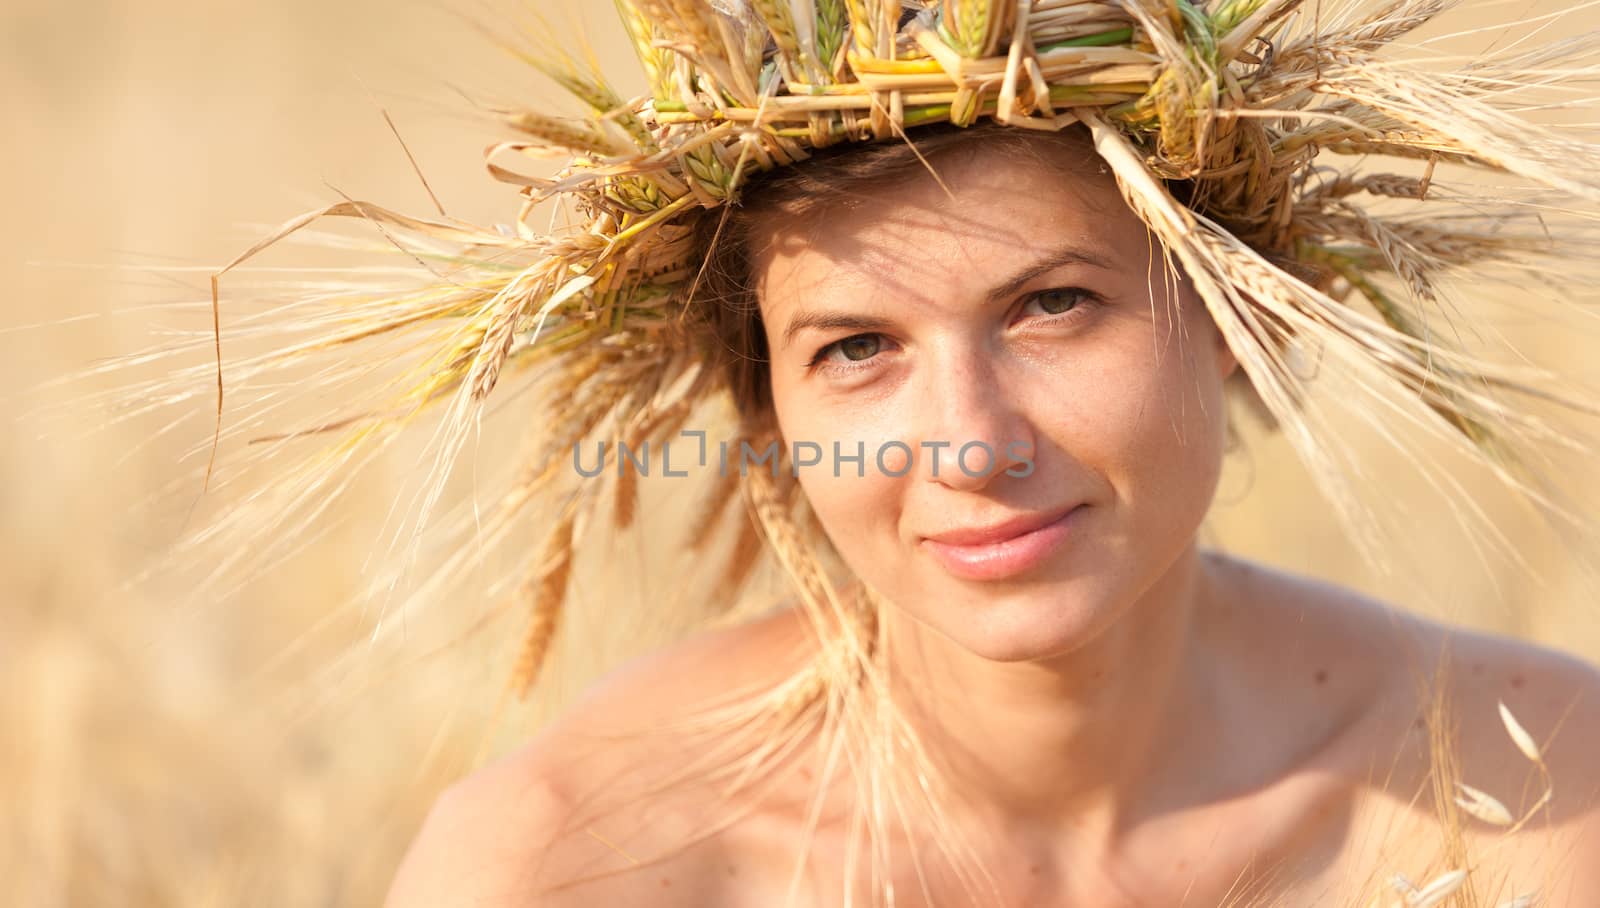 woman in field of wheat by vladimir_sklyarov